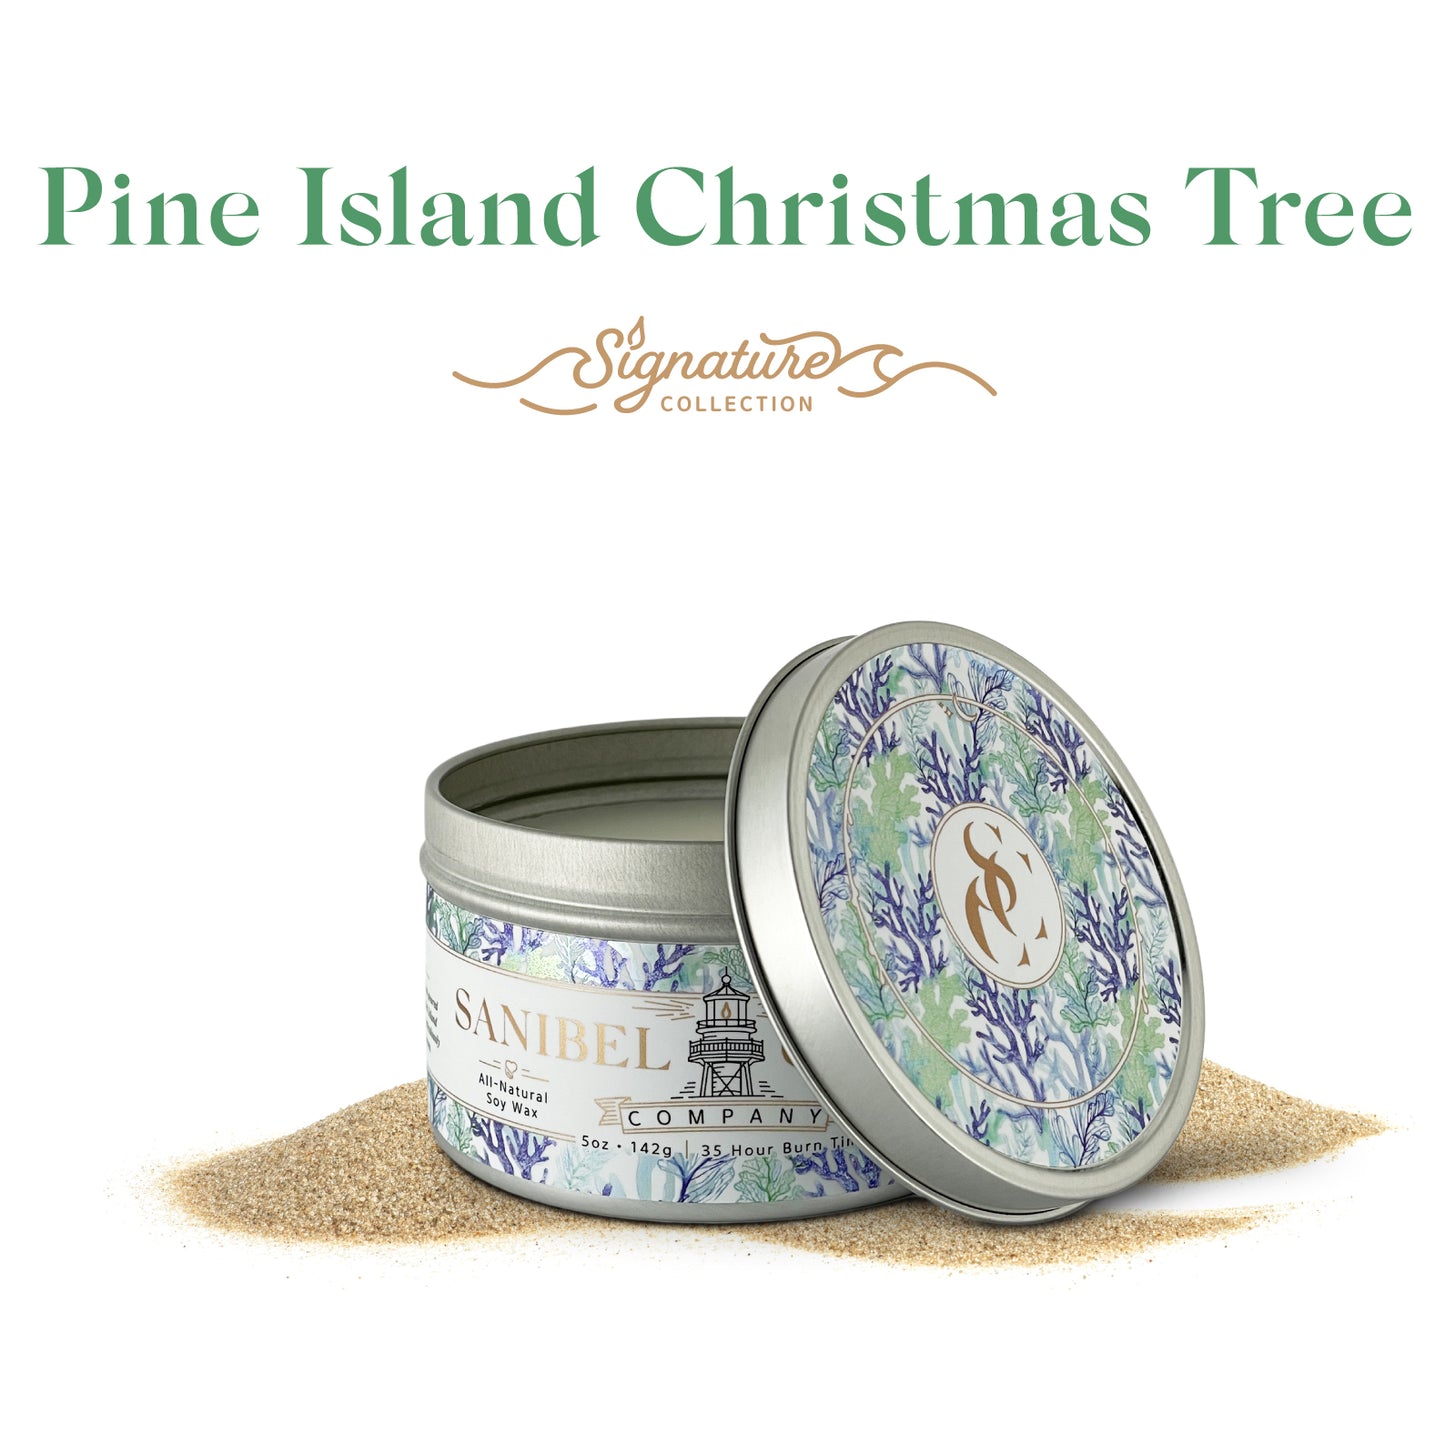 Pine Island Christmas Tree - Signature Candle - 8 oz